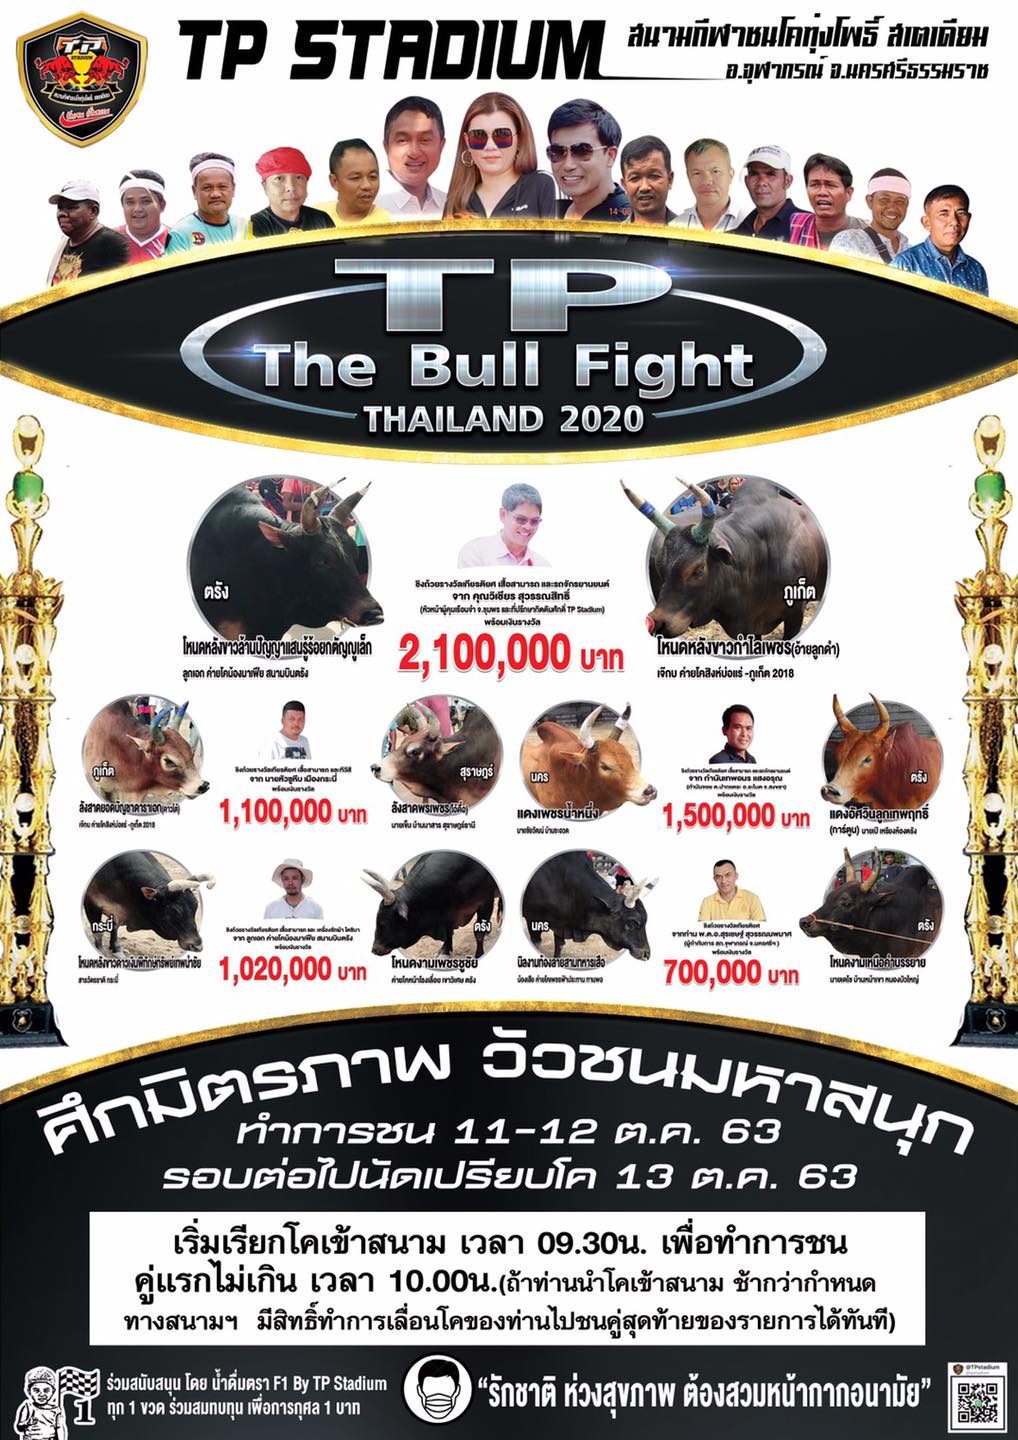 TP The Bull Fight Thailand2020 ศึกมิตรภาพ วัวชนมหาสนุก โปรแกรมวันที่ 11-12 ตุลาคมนี้